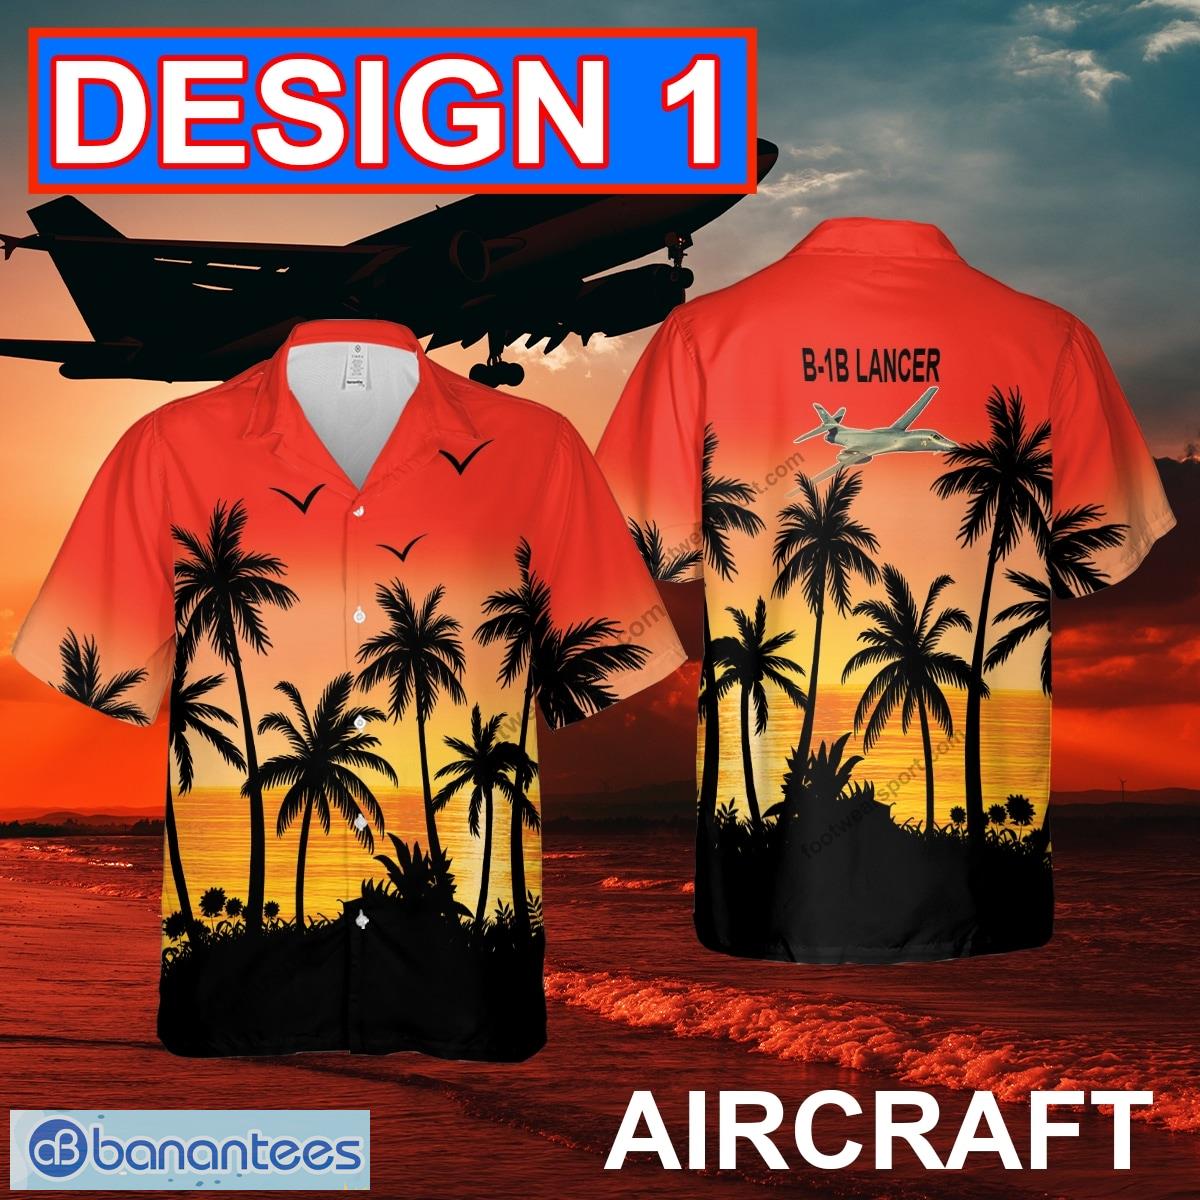 B-1B Lancer B1B Aircraft Hawaiian Shirt Red Color For Men And Women - B-1B Lancer B1B Aircraft Hawaiian Shirt Multi Design 1